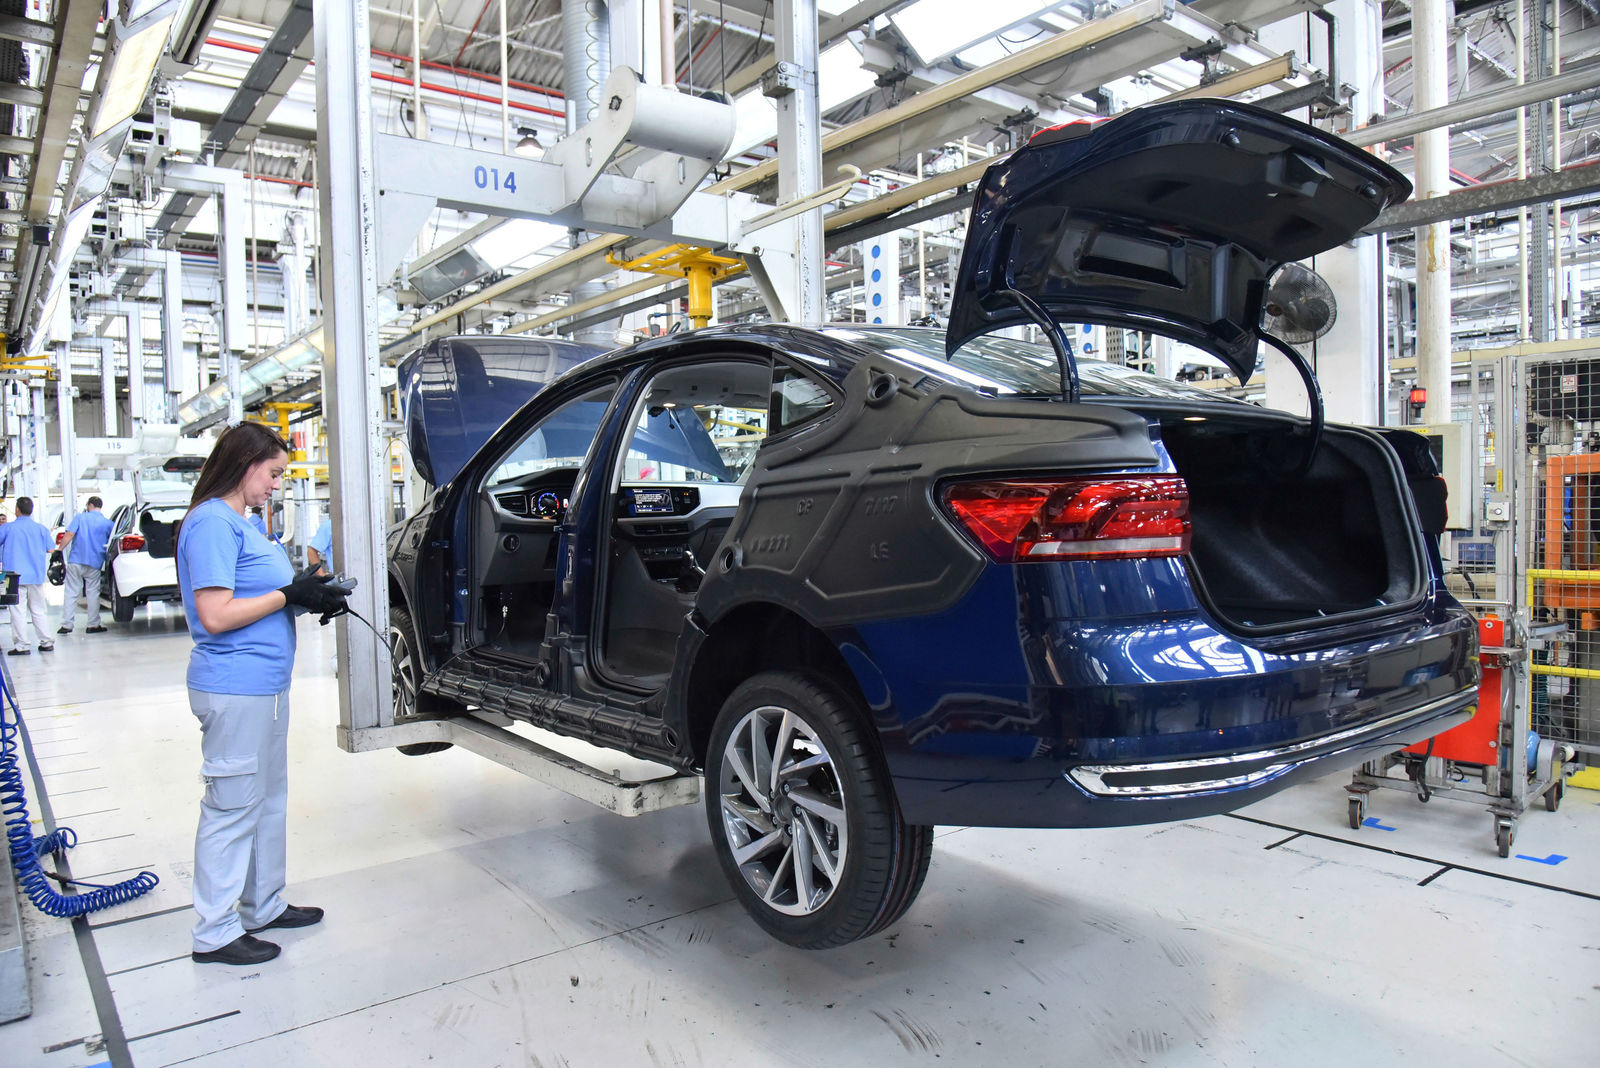 Volkswagen do Brasil, Anchieta plant